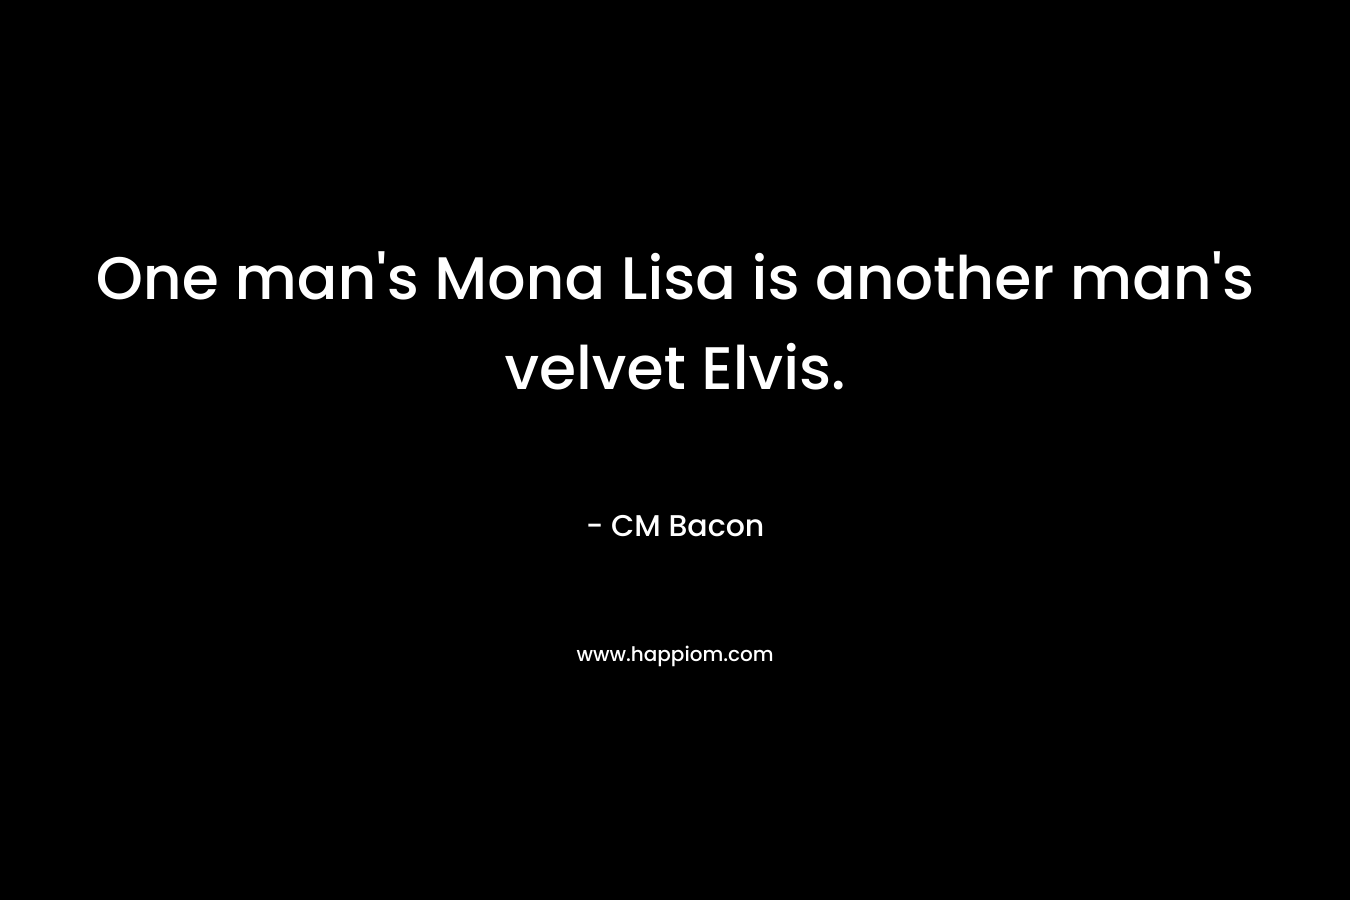 One man's Mona Lisa is another man's velvet Elvis.